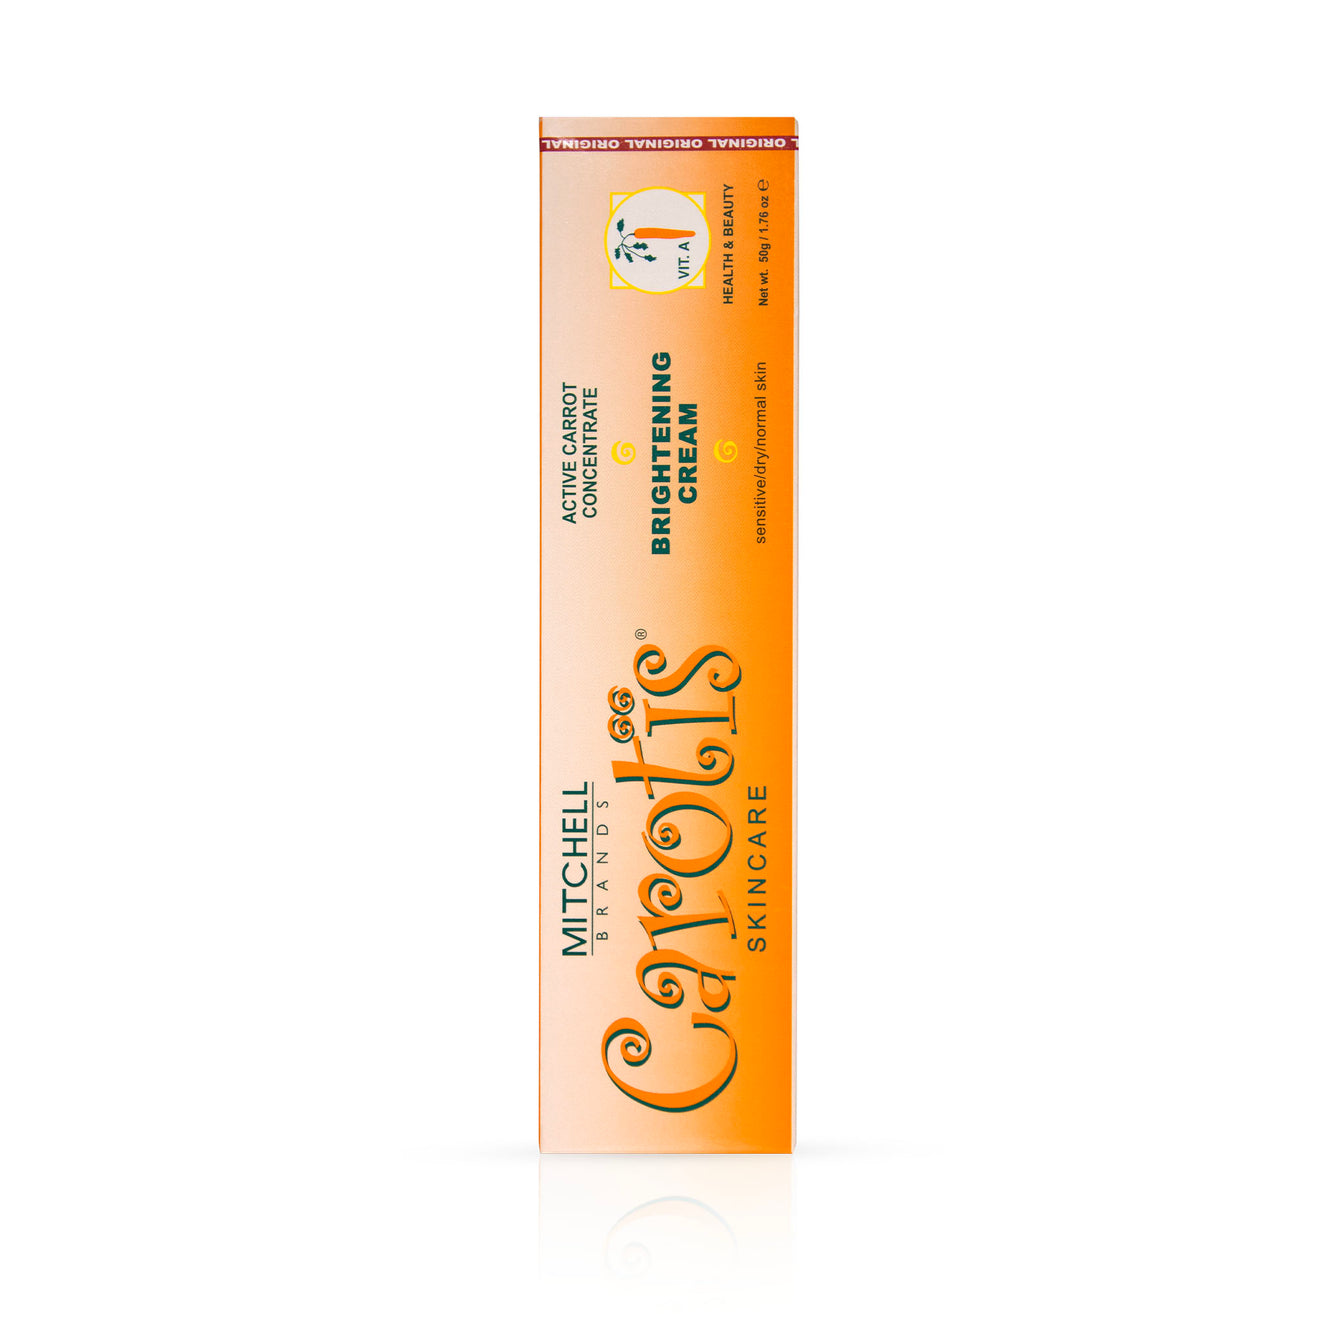 Carotis Brightening Cream - 50gm / 1.7 fl oz Carotis - Mitchell Brands - Skin Lightening, Skin Brightening, Fade Dark Spots, Shea Butter, Hair Growth Products